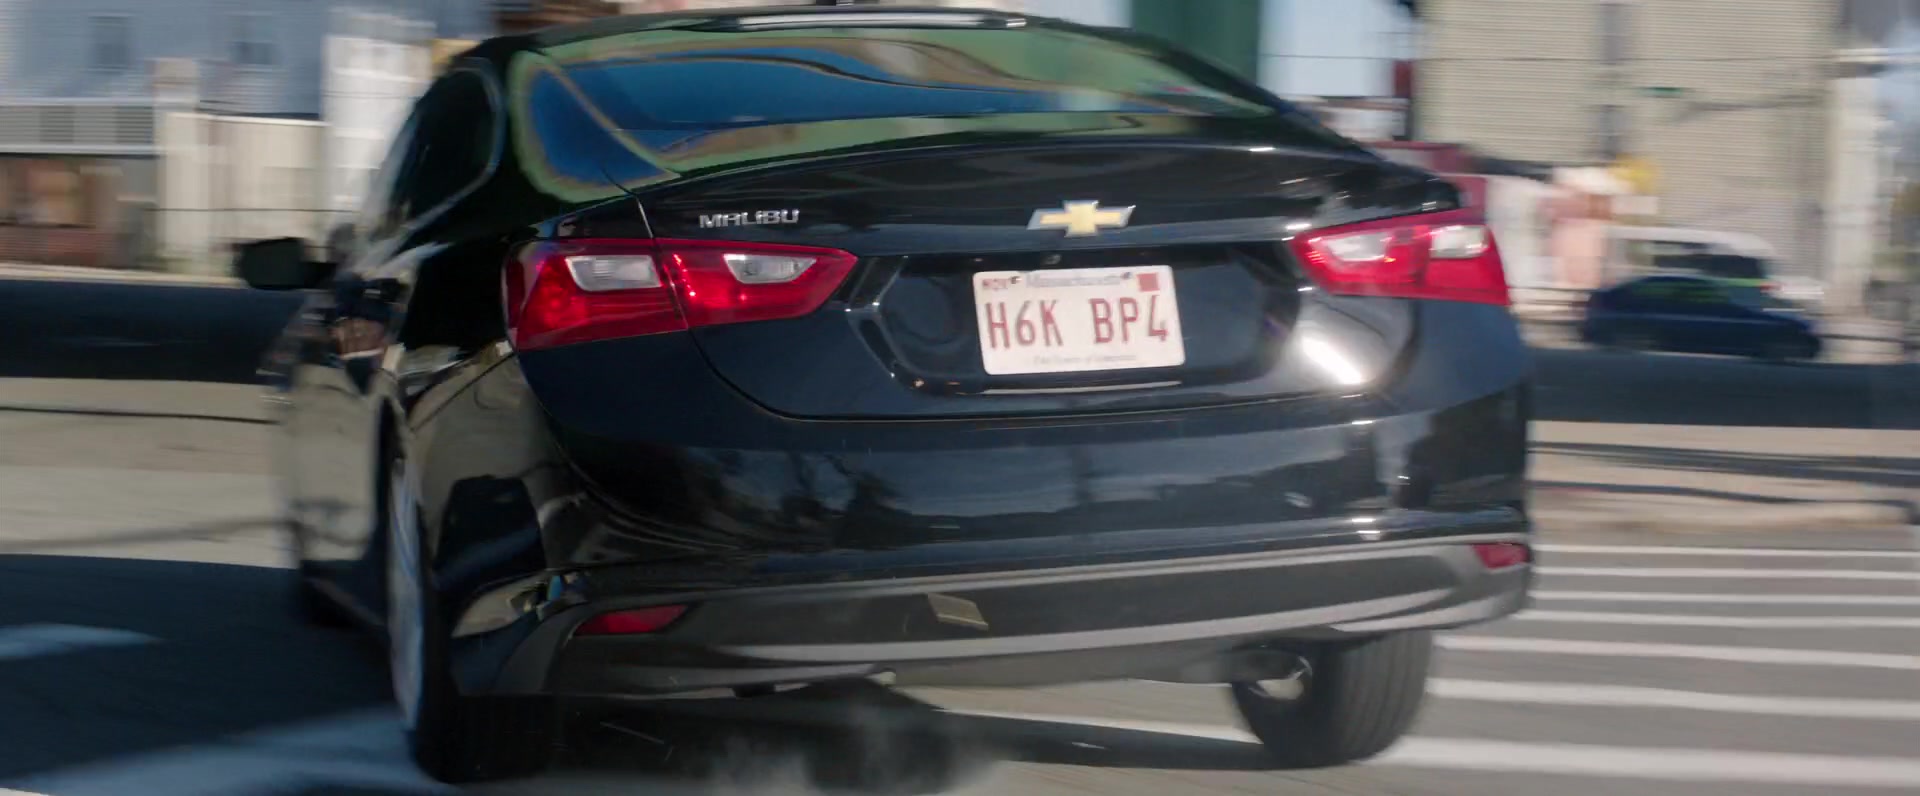 Chevrolet Malibu Car Driven by Denzel Washington in The Equalizer 2 (2018) Movie